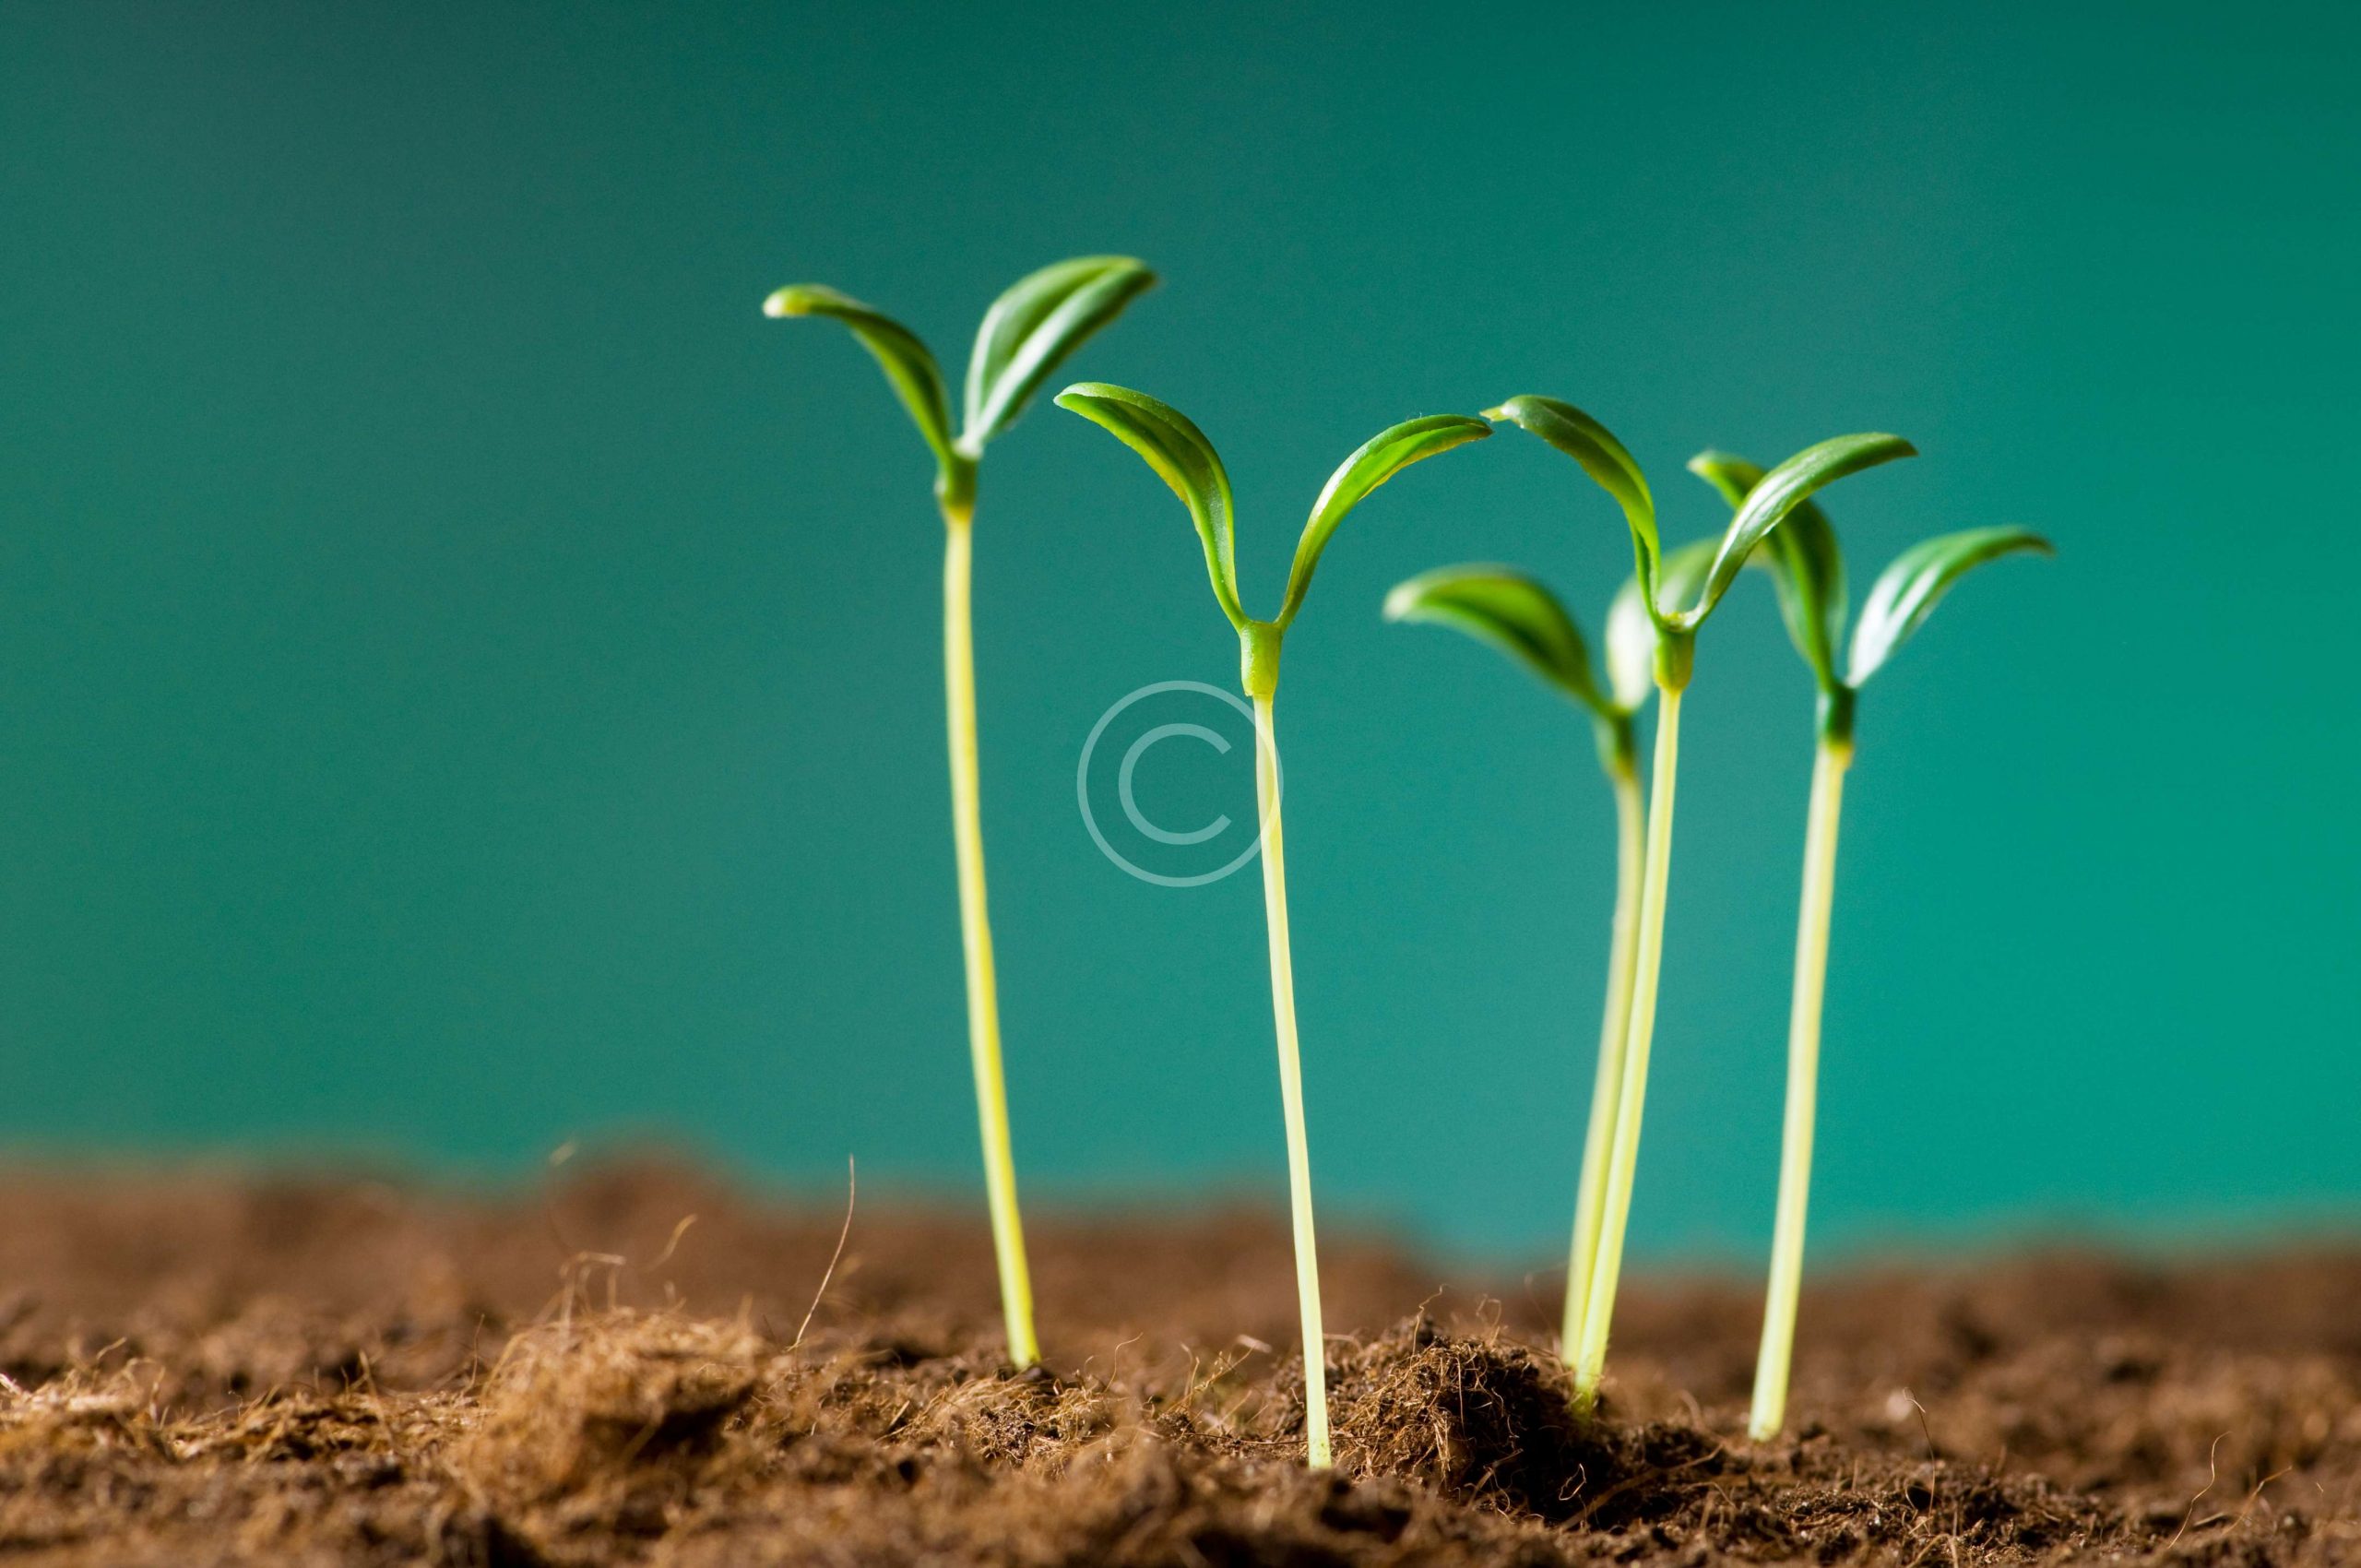 bigstock-Green-seedling-illustrating-co-14319230-scaled